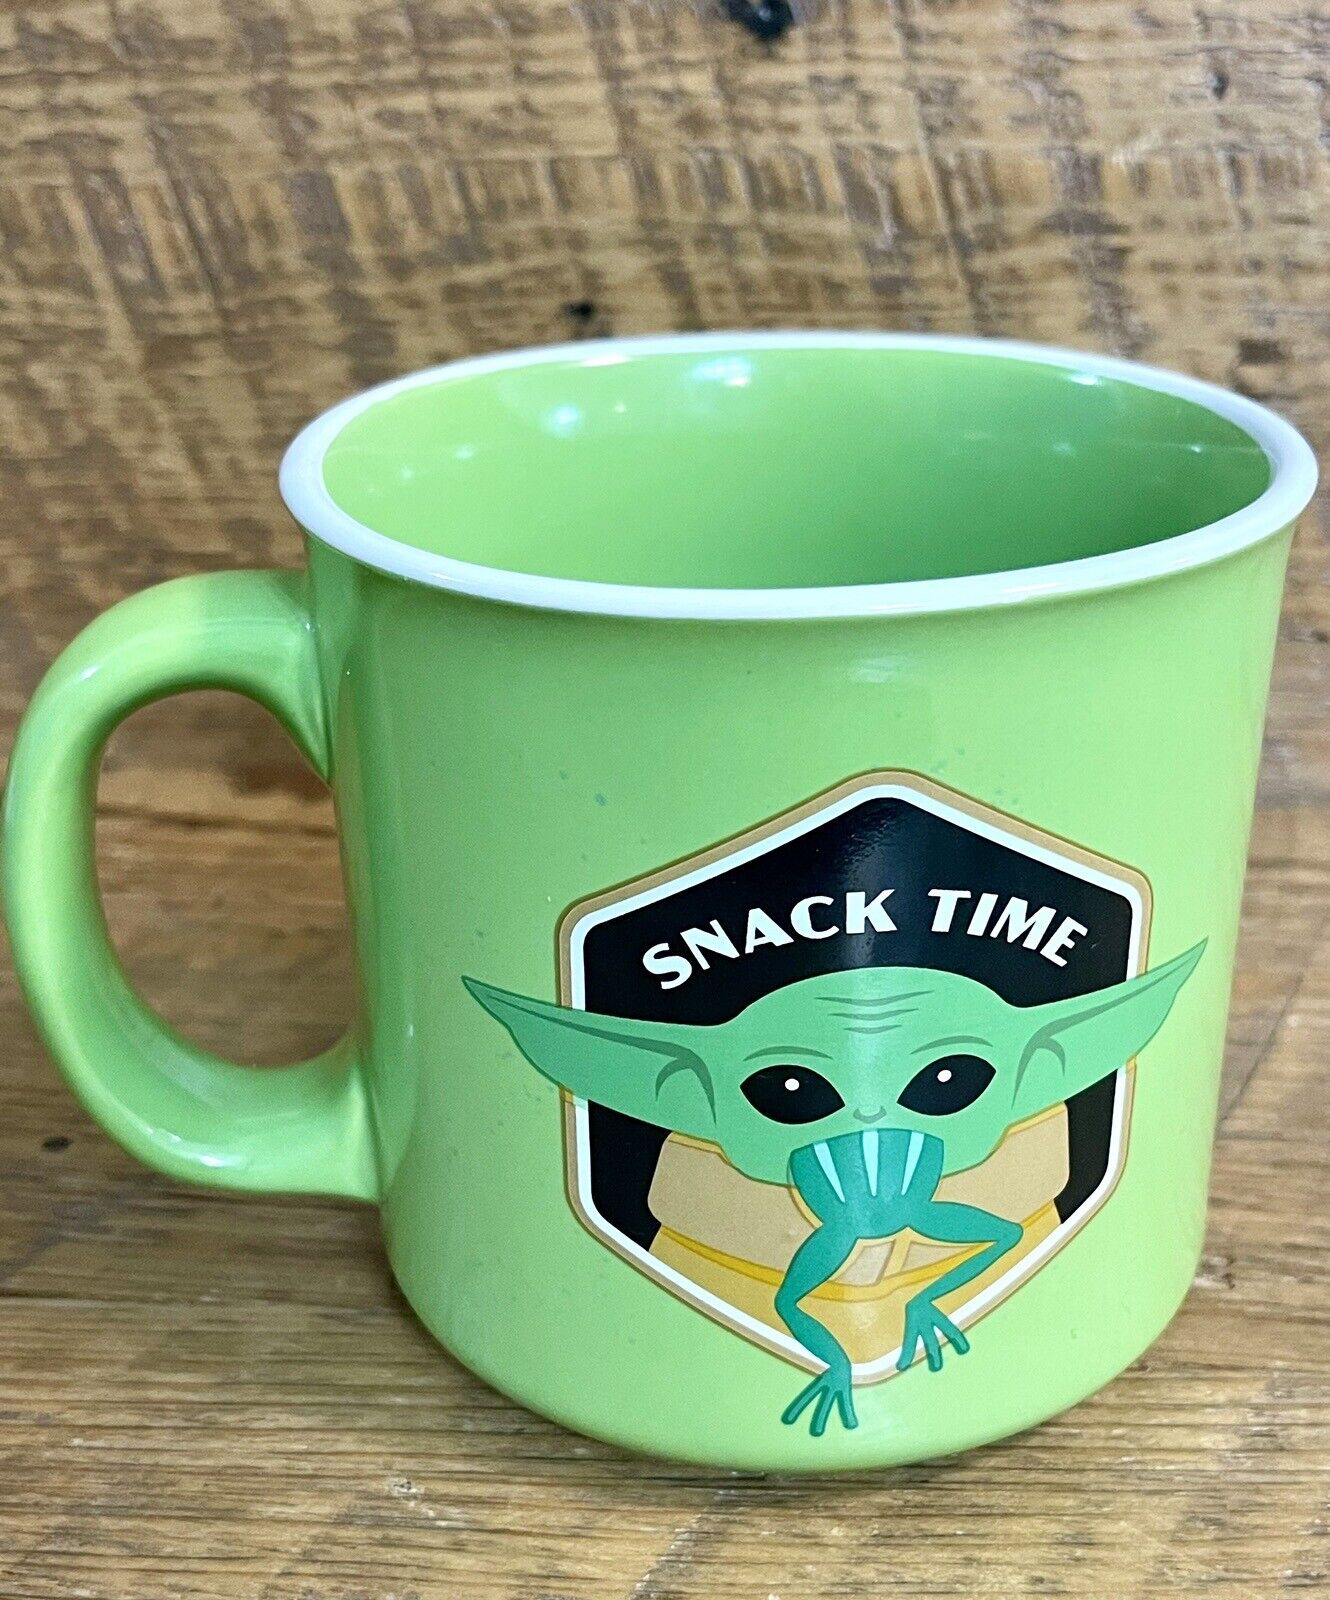 Grogu Baby Yoda Snack Time Mug Star Wars The Mandalorian Coffee Tea Cup 20 Oz